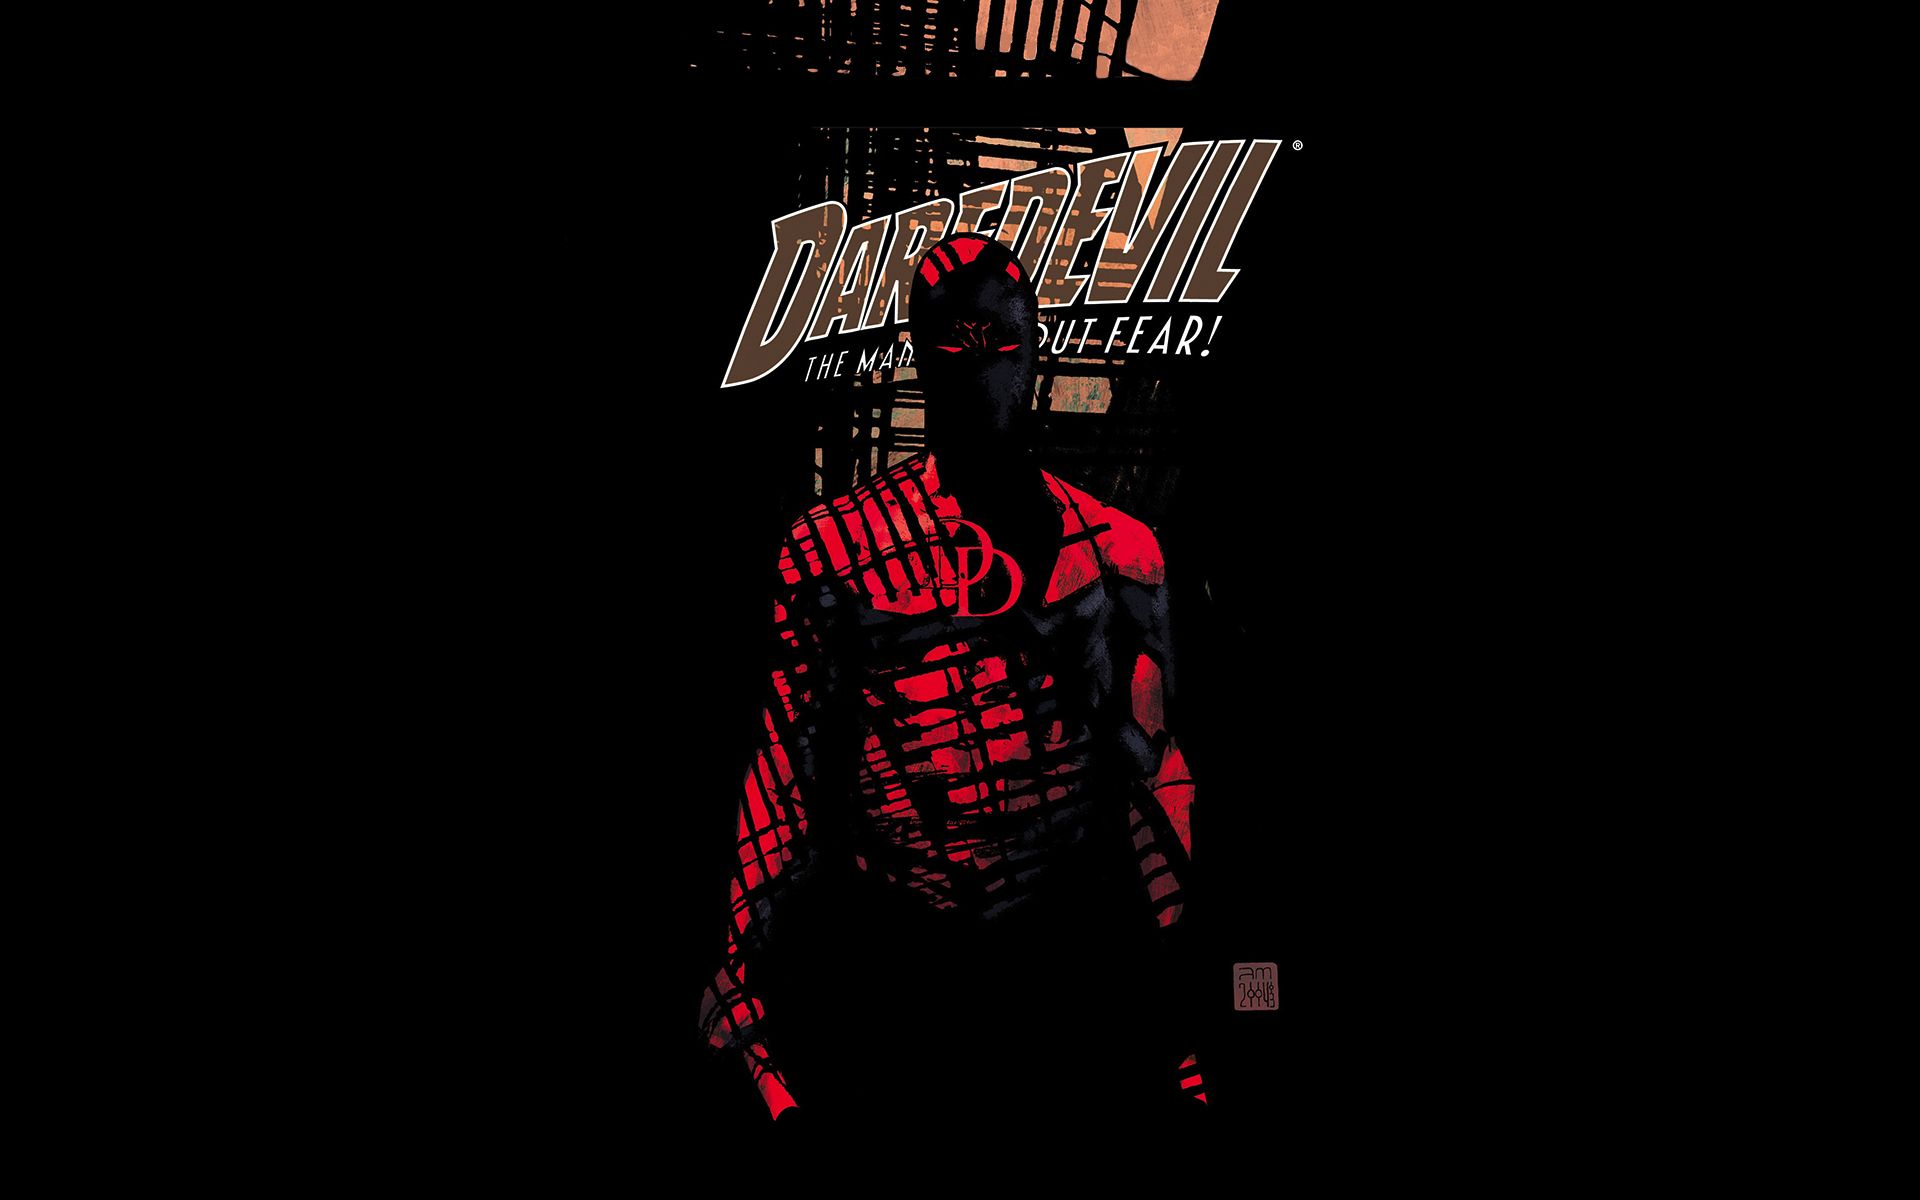 Daredevil Wallpapers